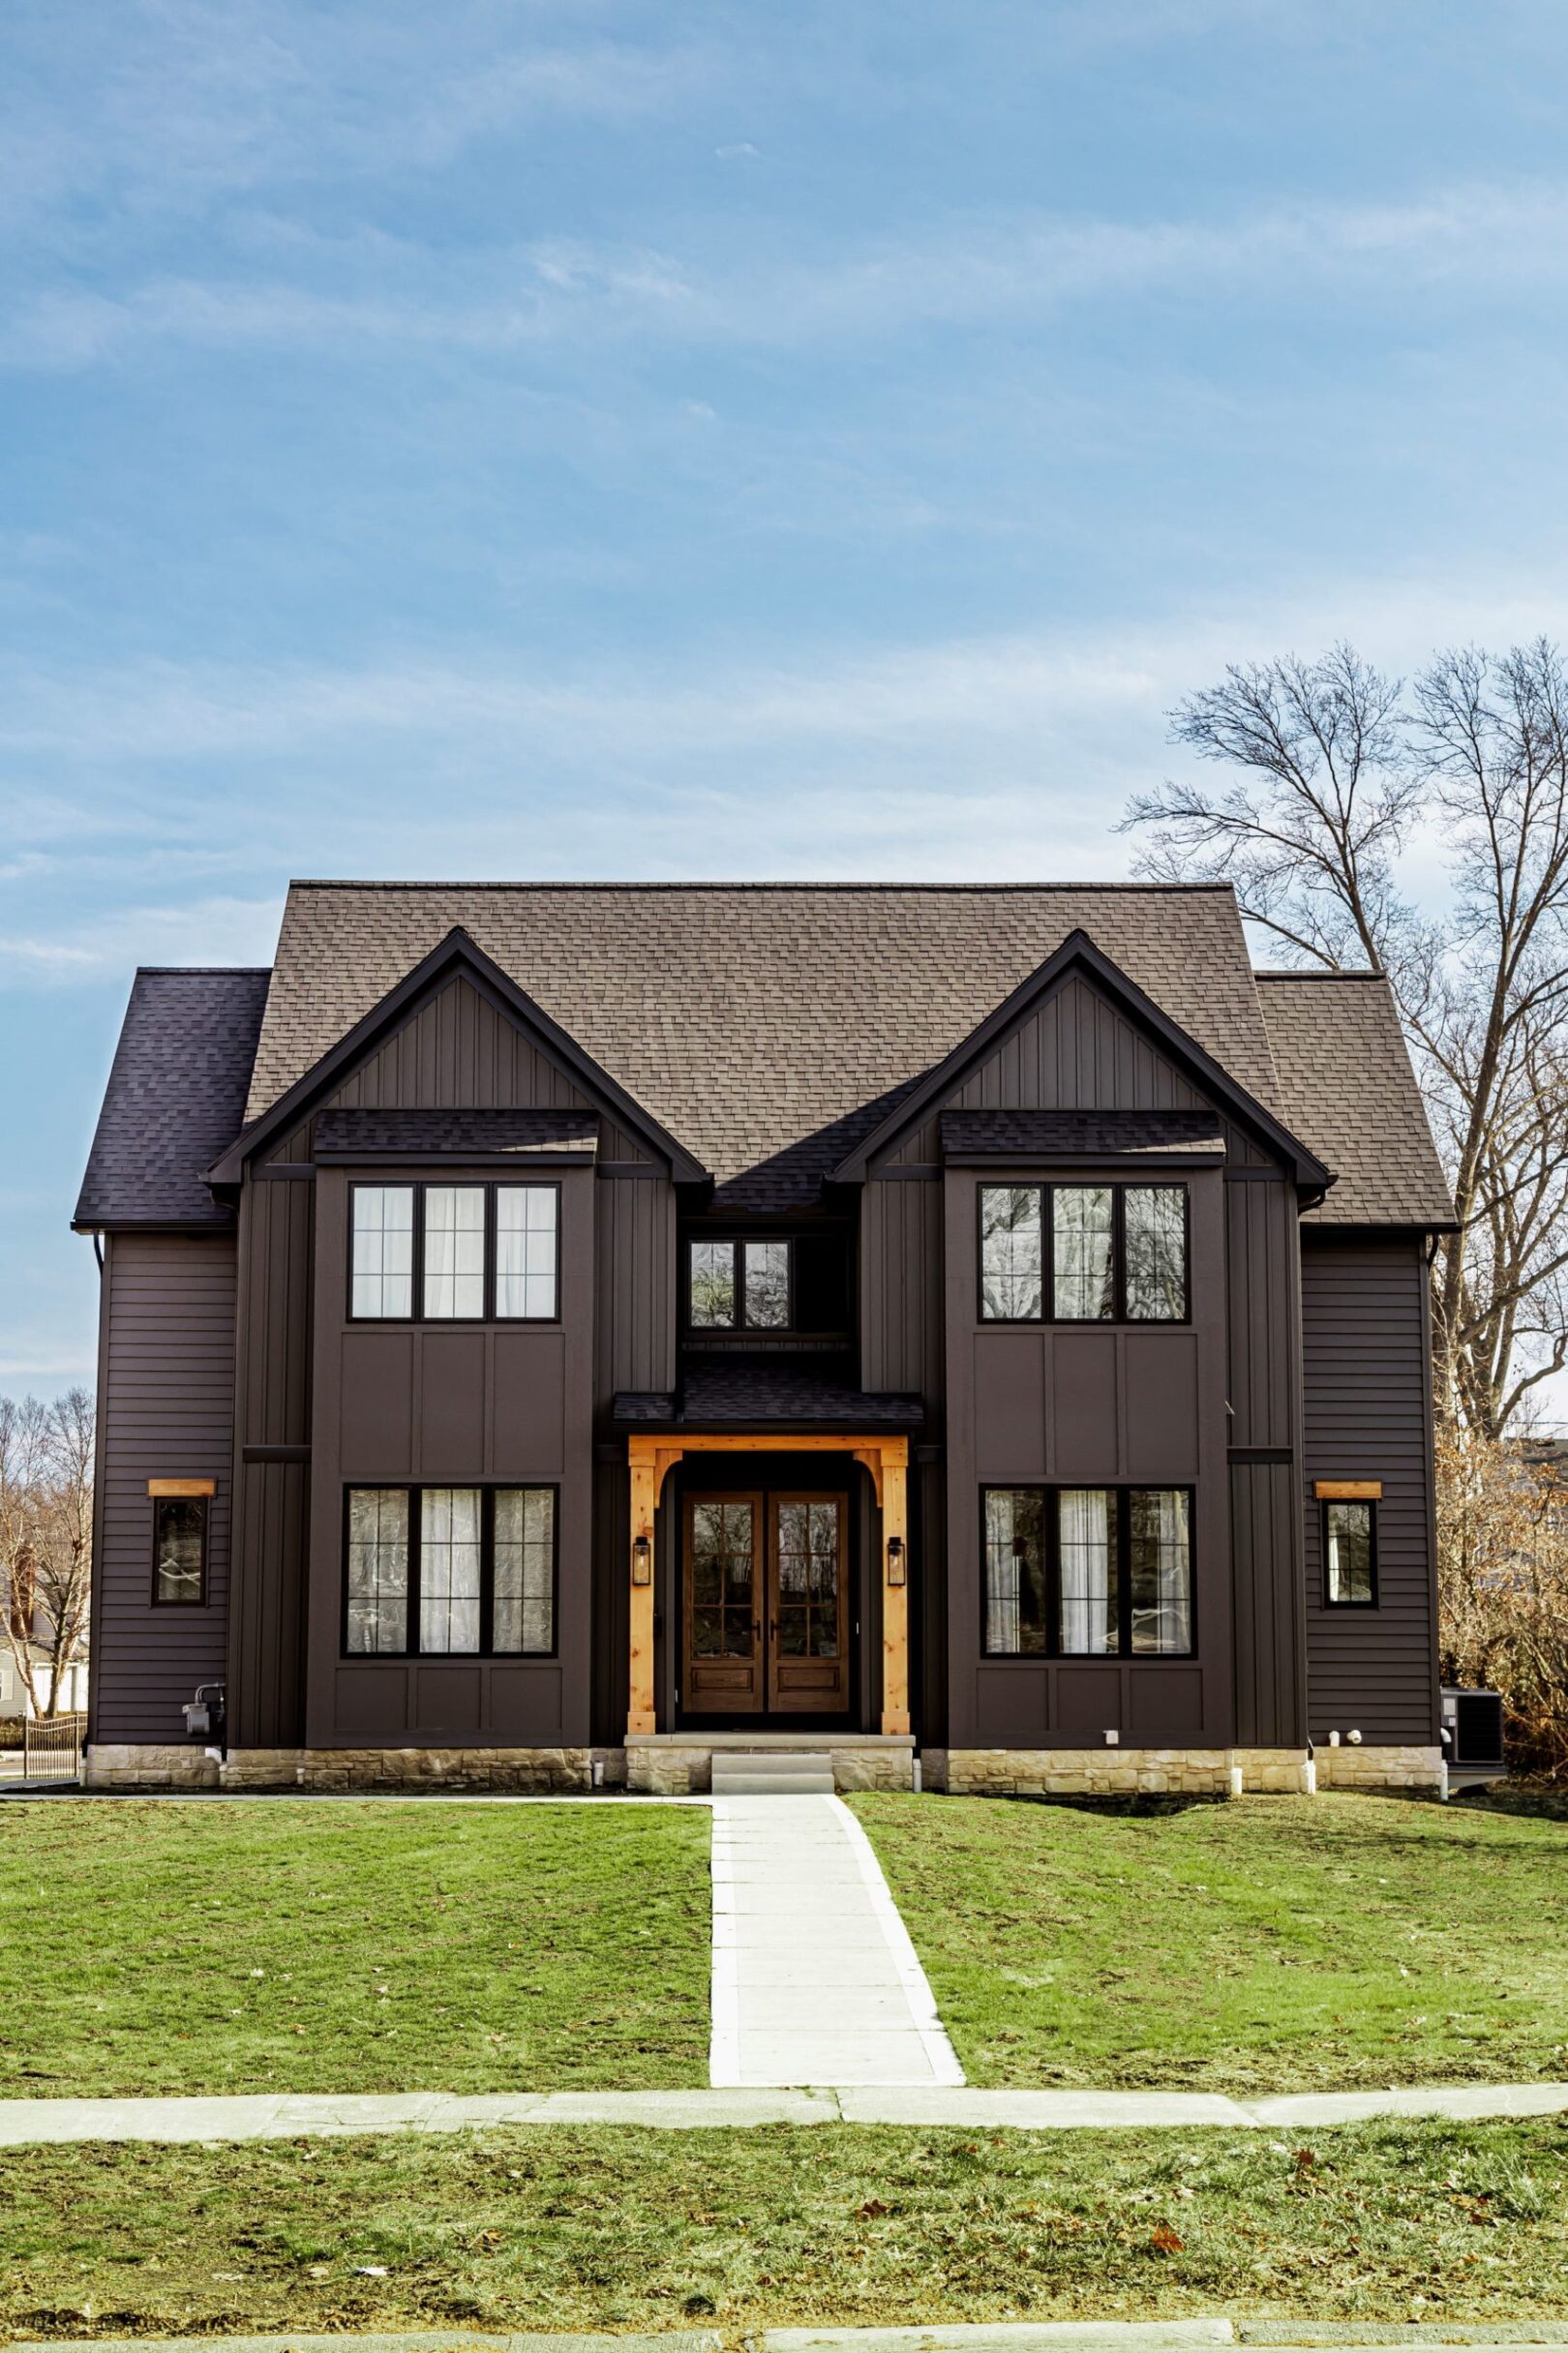 Modern classic home in Ohio